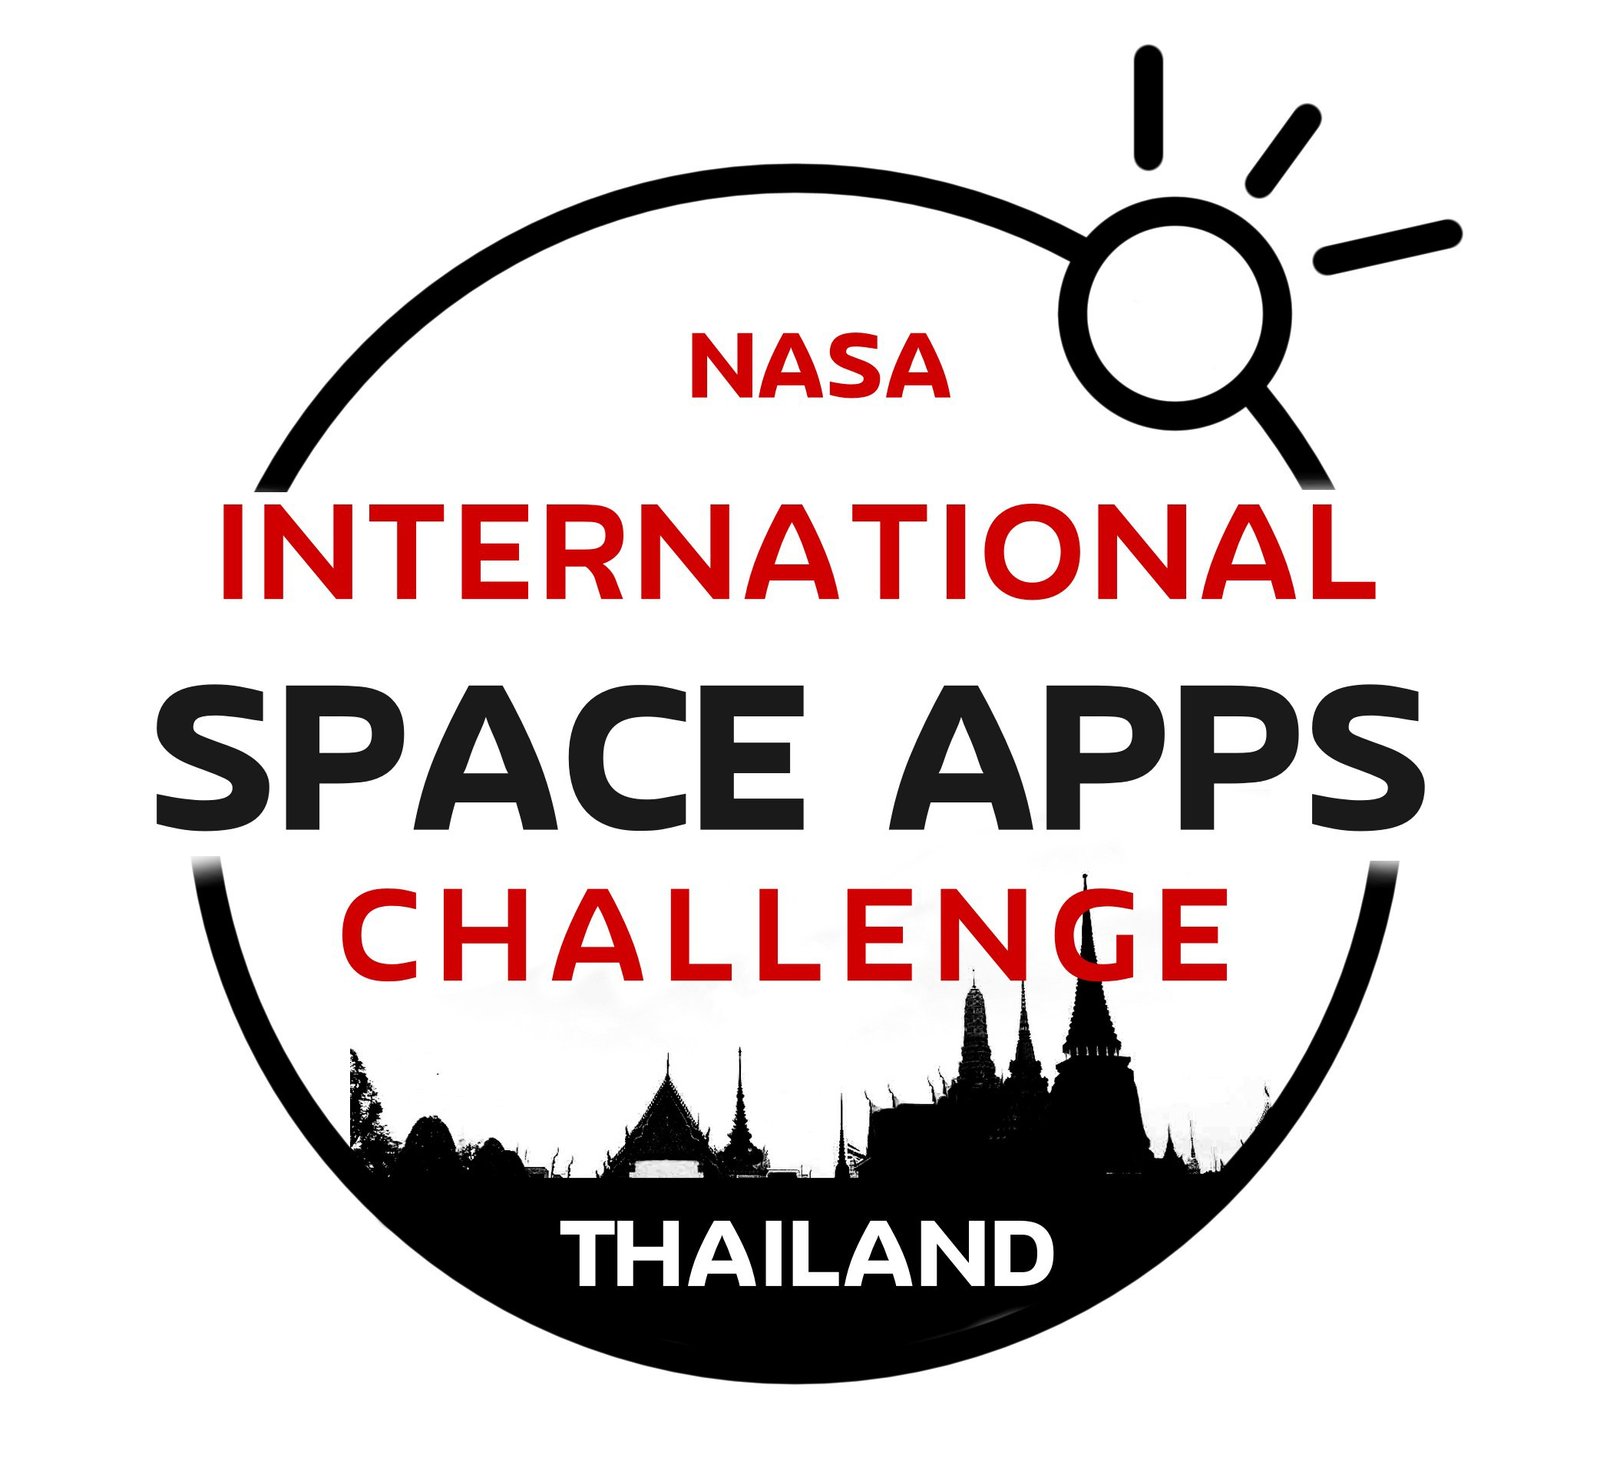 Nasa International Space App Challenge 2020 สอนโดรน อบรมโดรน สอนบ นโดรน โรงเร ยนสอนโดรน อ นด บหน งของไทย - how to fix roblox error occurred while starting roblox สอนวธแก